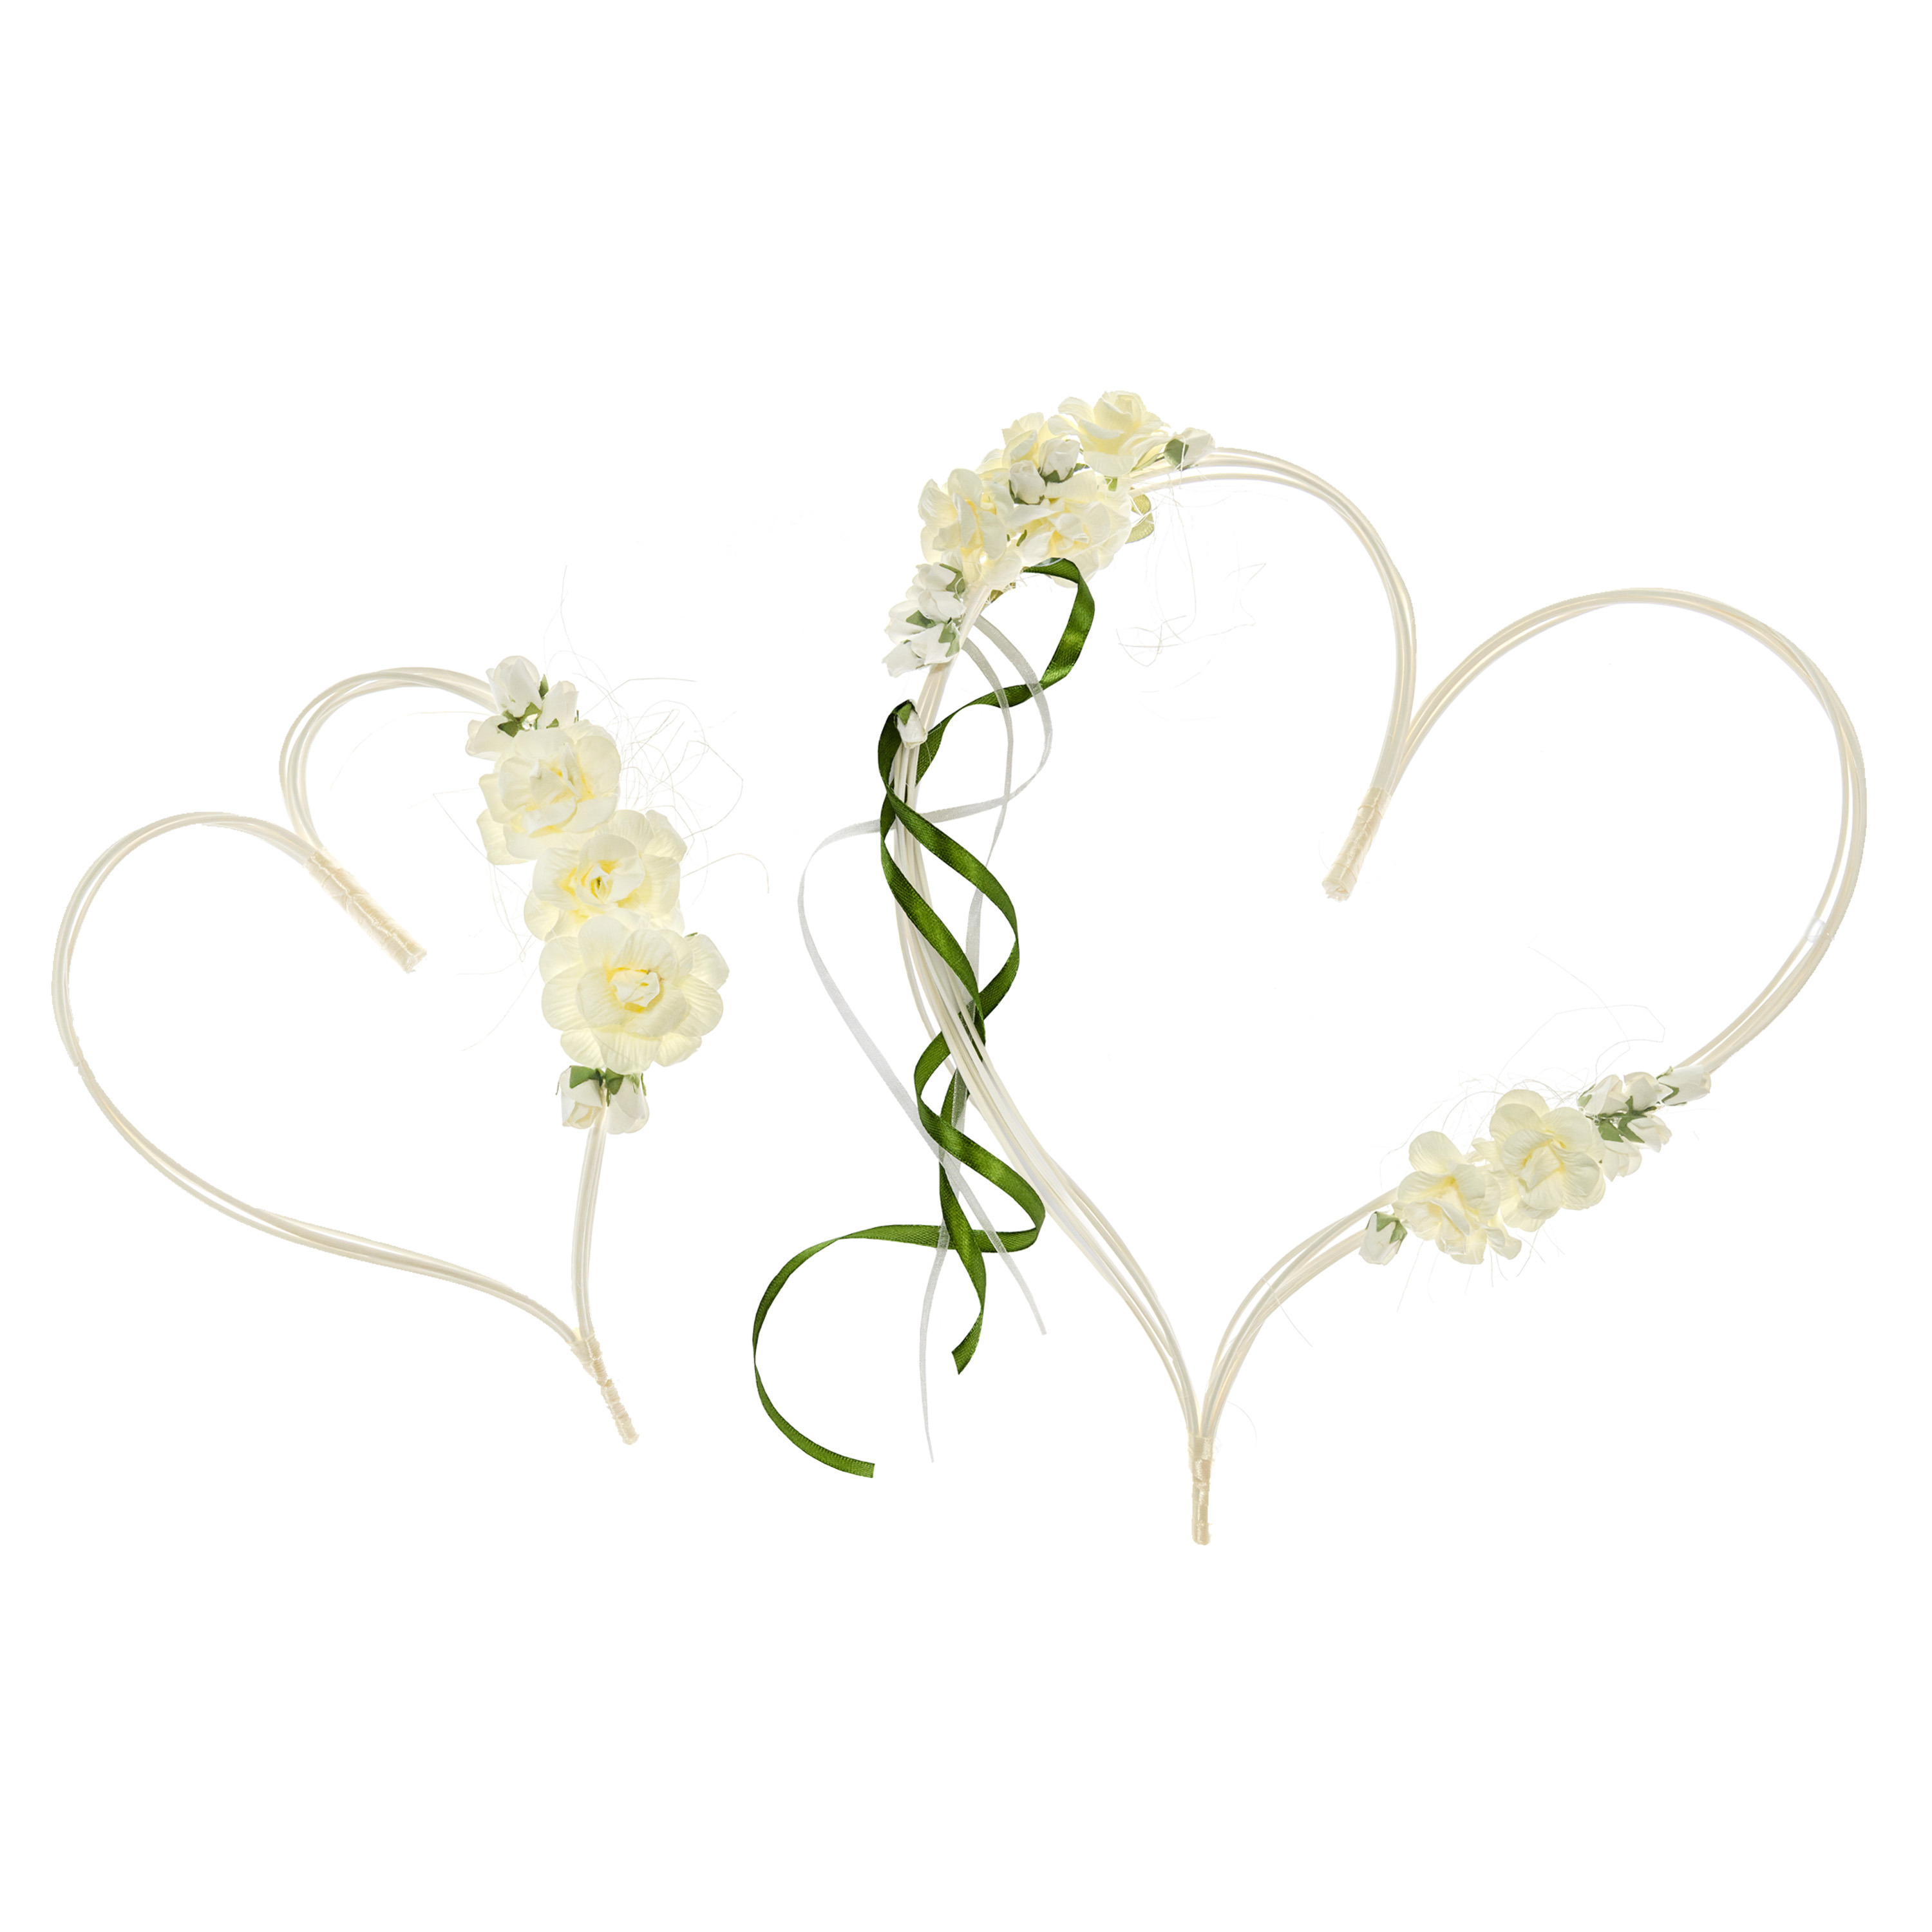 Trouwauto decoratie bloemen harten Bruiloft creme wit 2x 19-30 cm